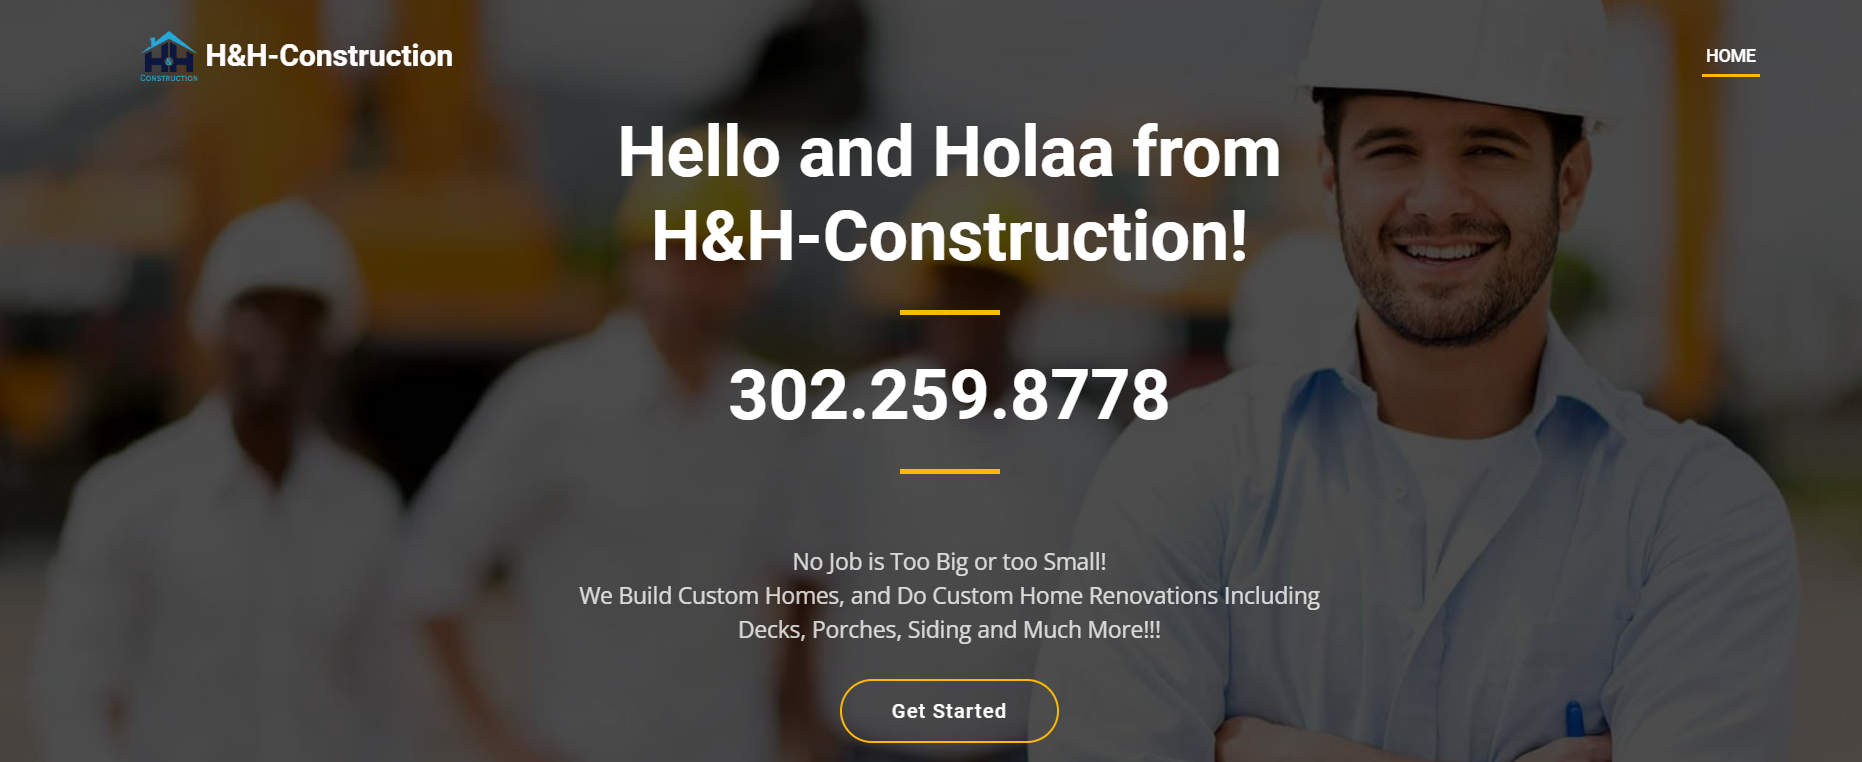 H&H-Construction